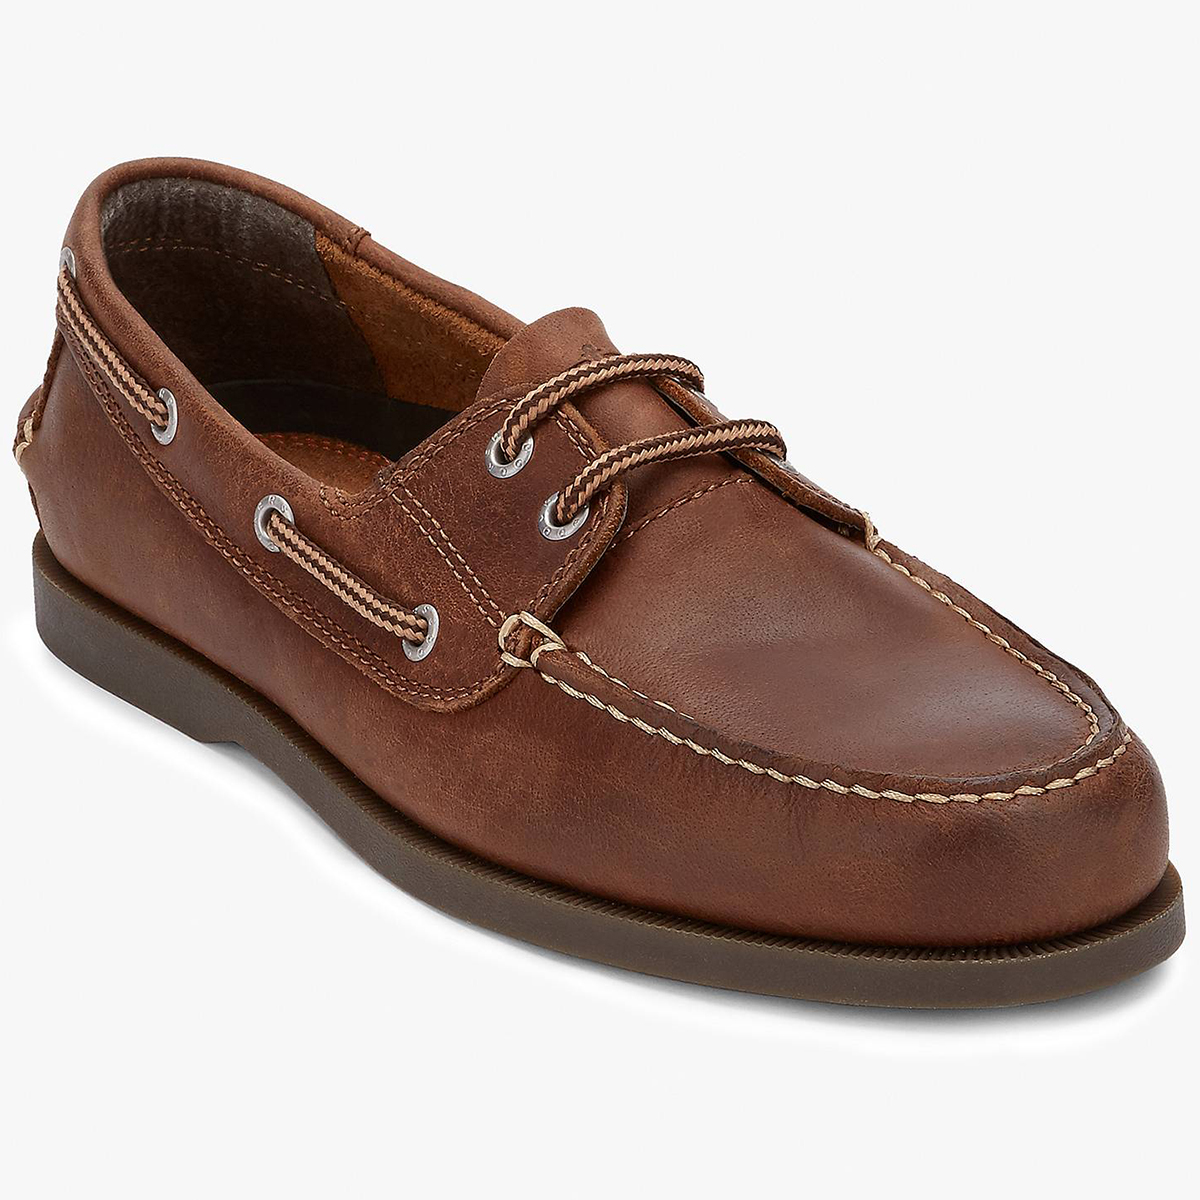 Dockers Men's Vargas Boat Shoes, Wide - Brown, 9